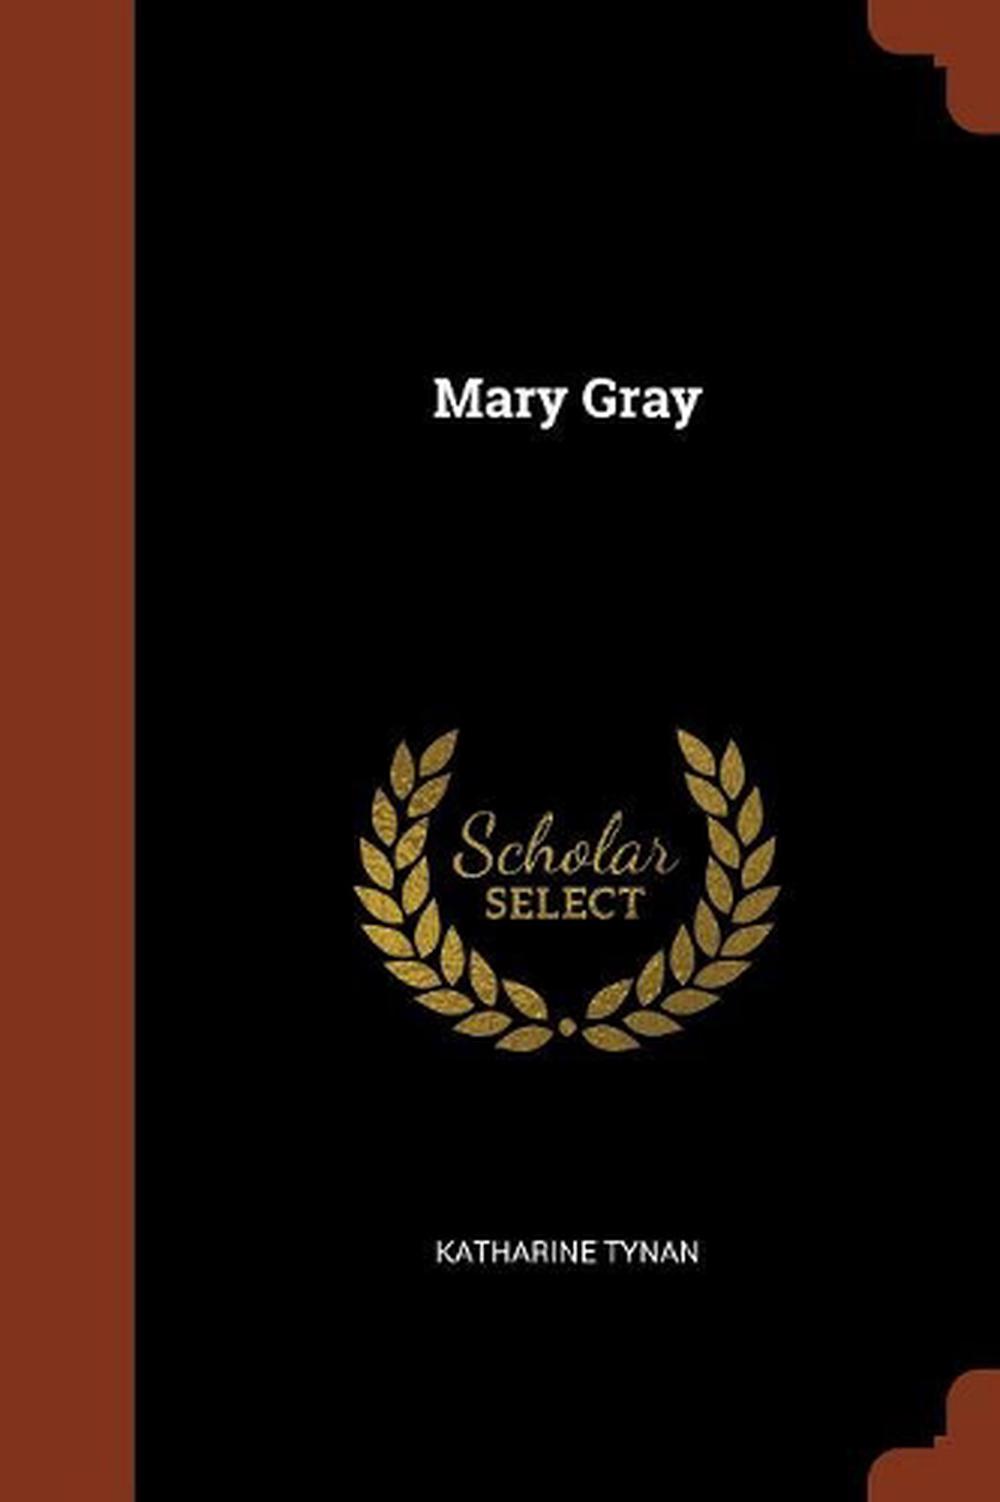 Into the Gray by Margaret Killjoy